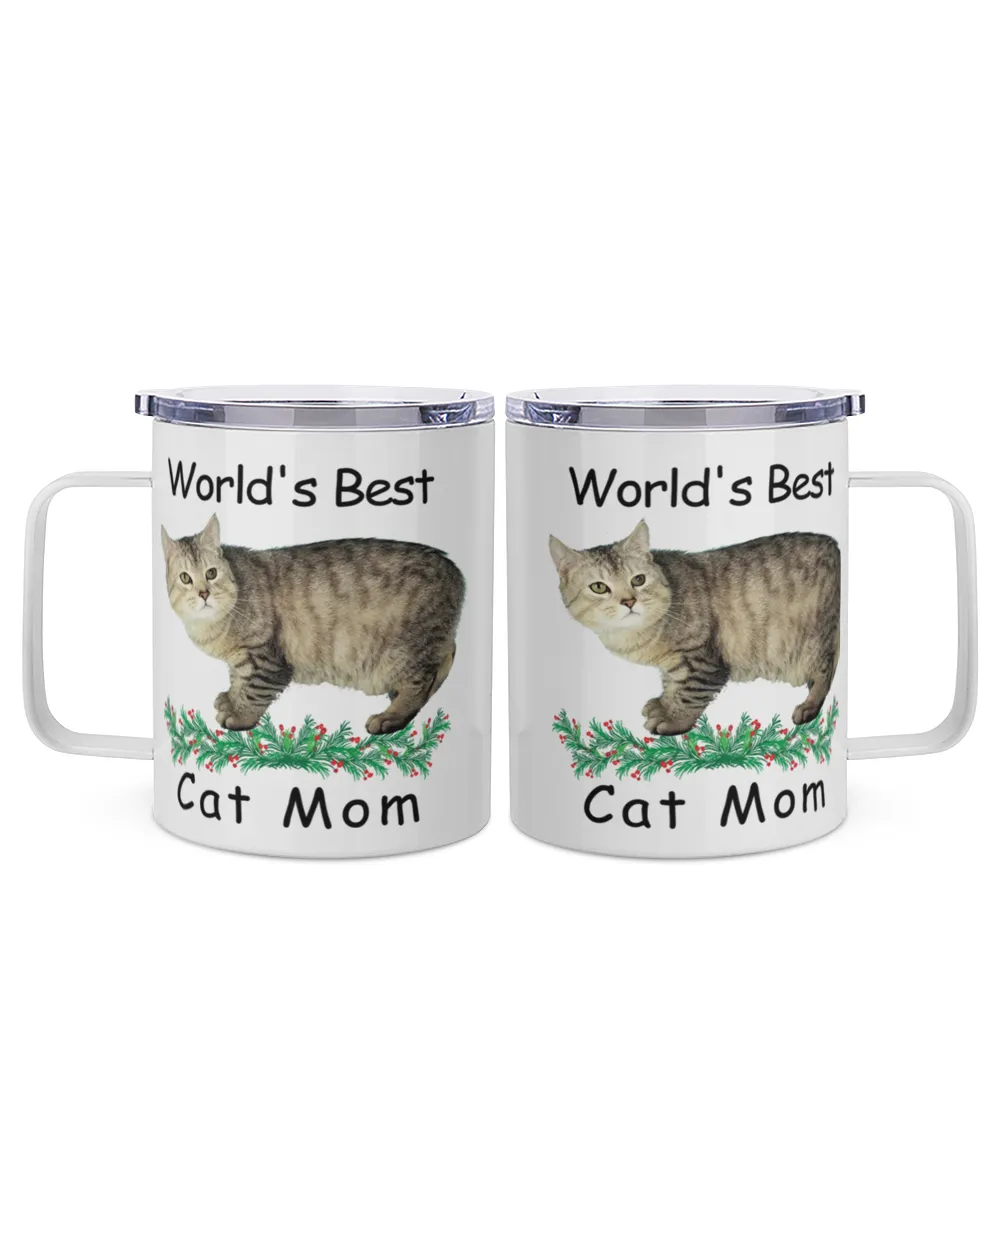 World's Best Manx Cat Tabby Mom